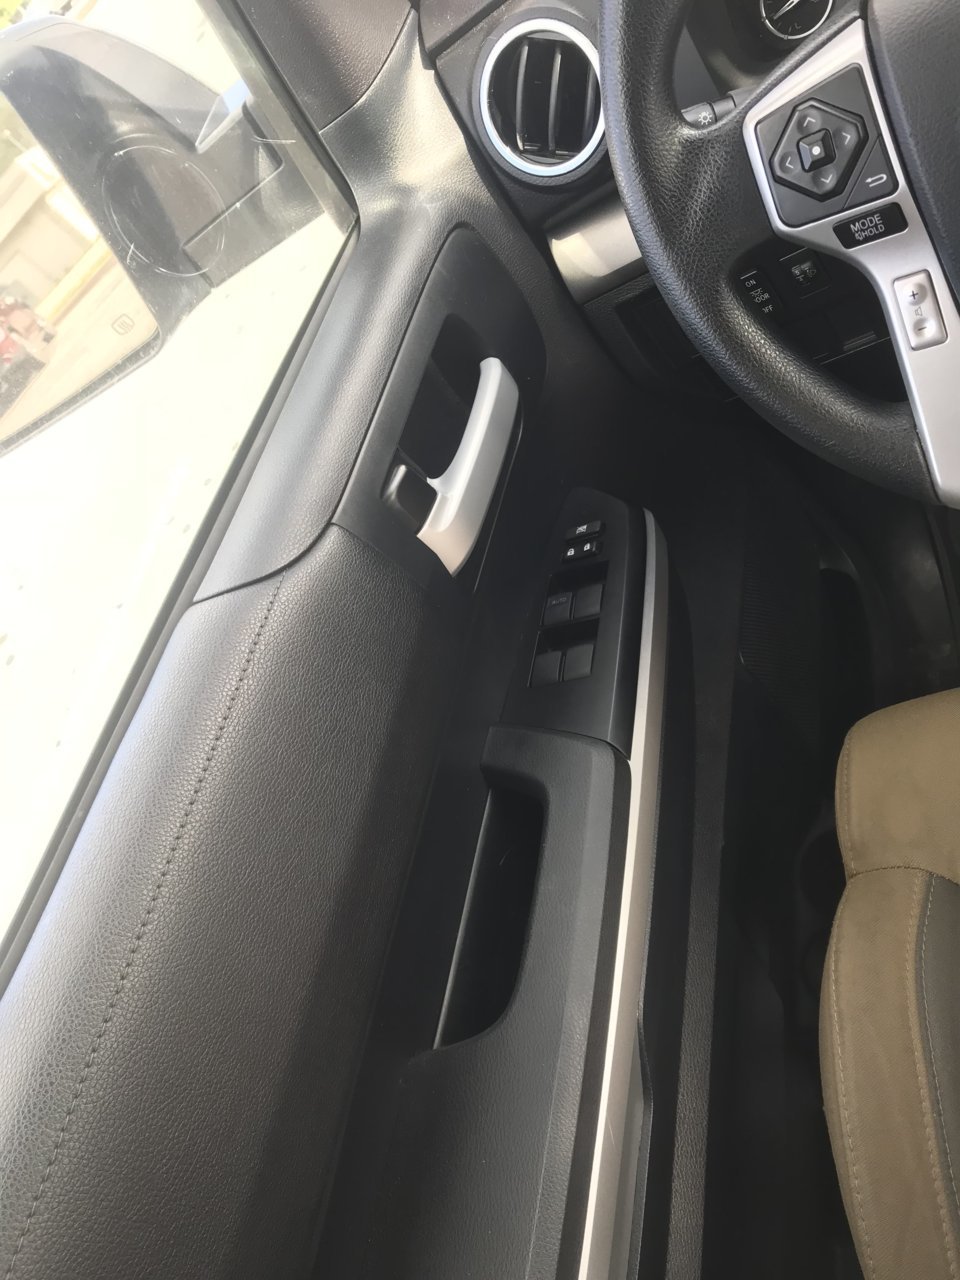 Removing Interior Panels Toyota Tundra Forum